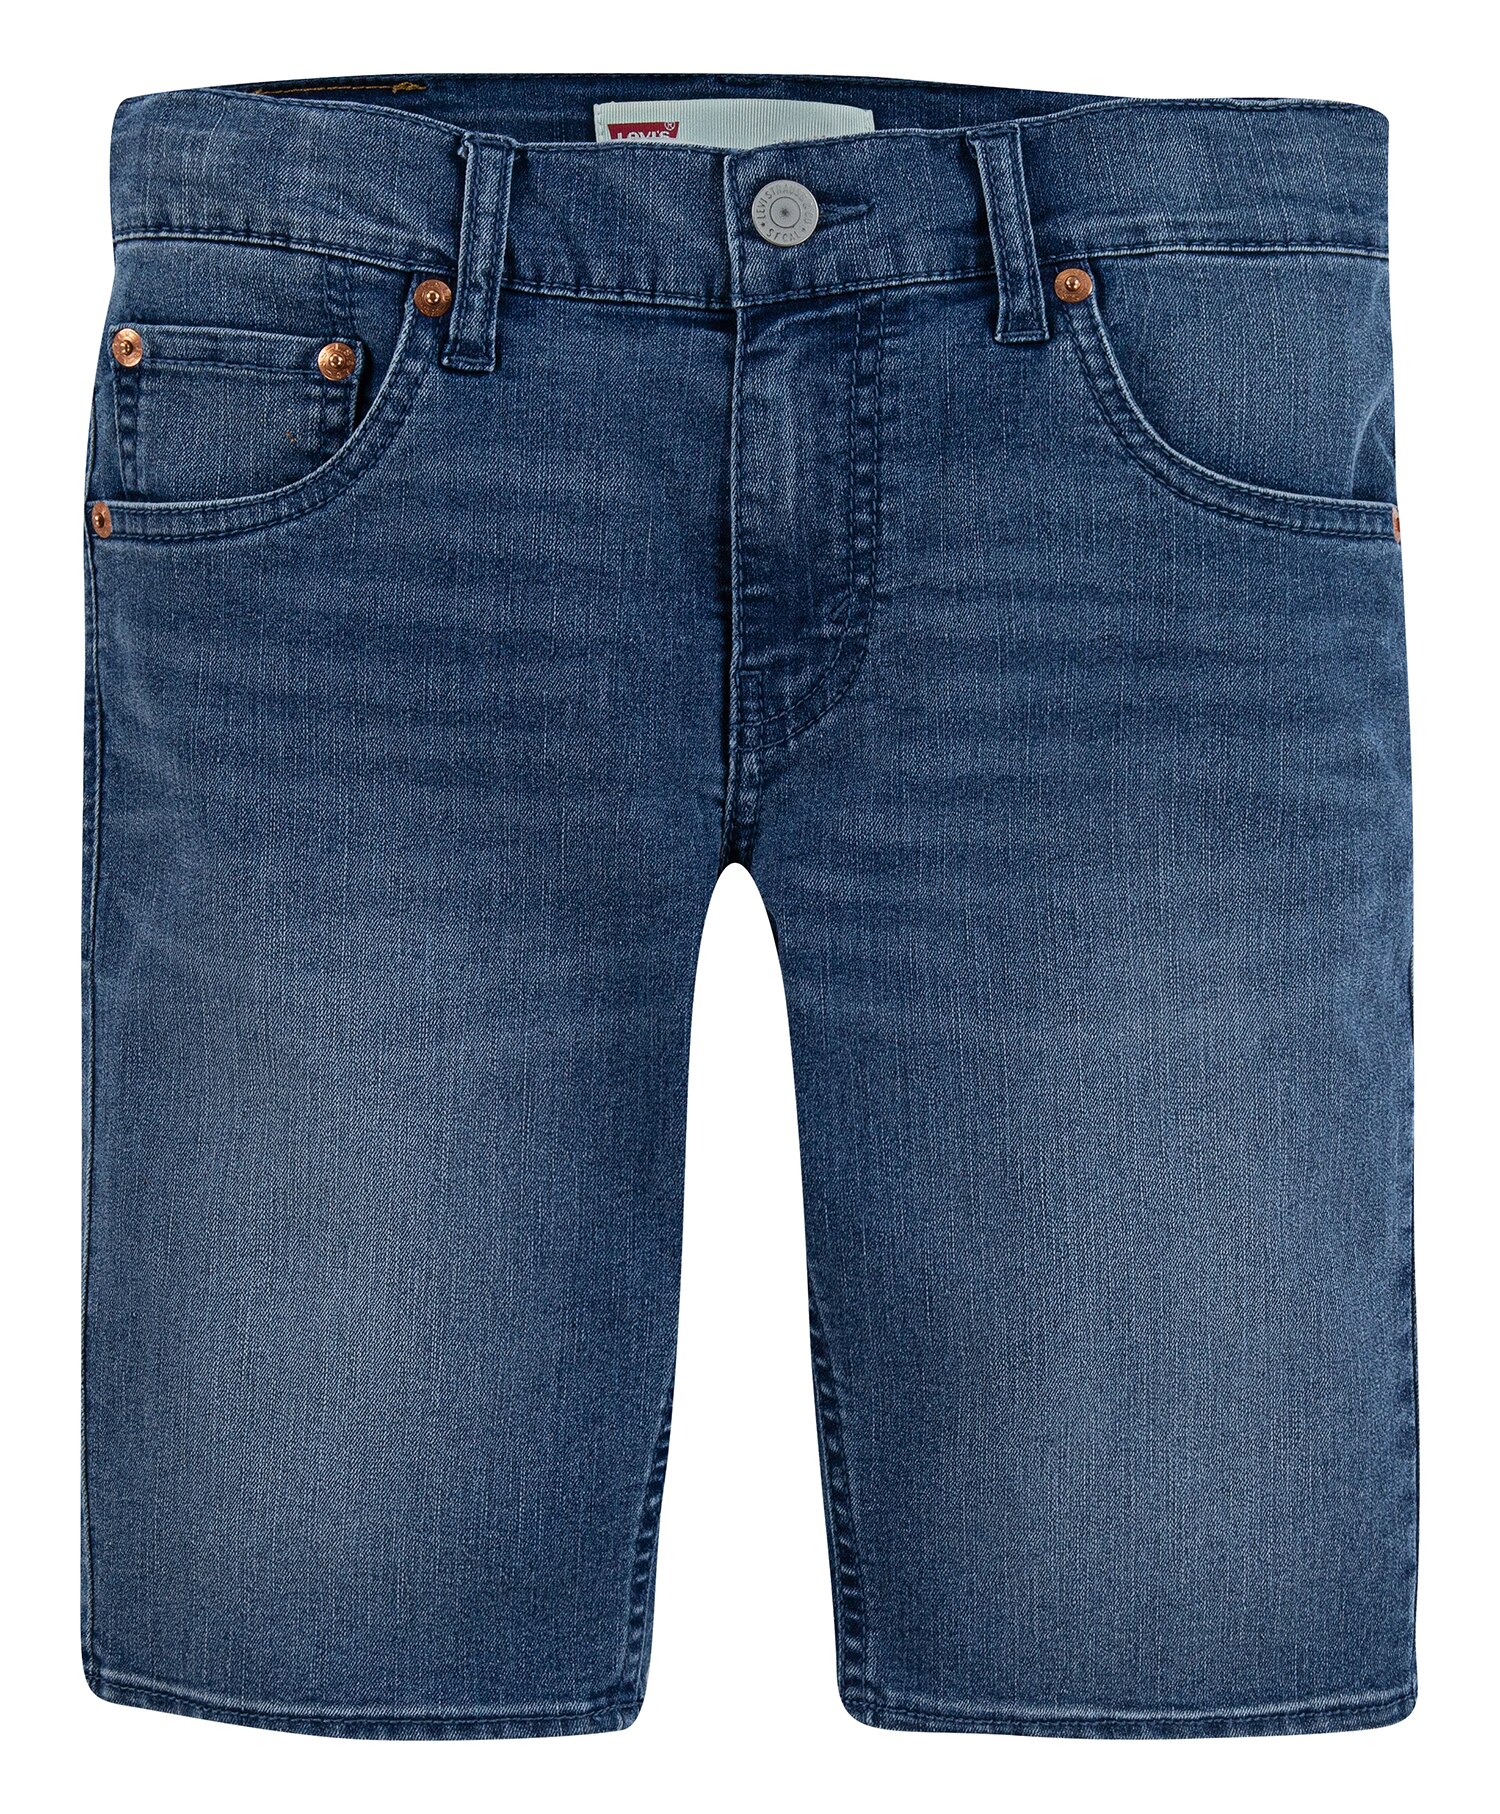 Levi's Jeans shorts 511